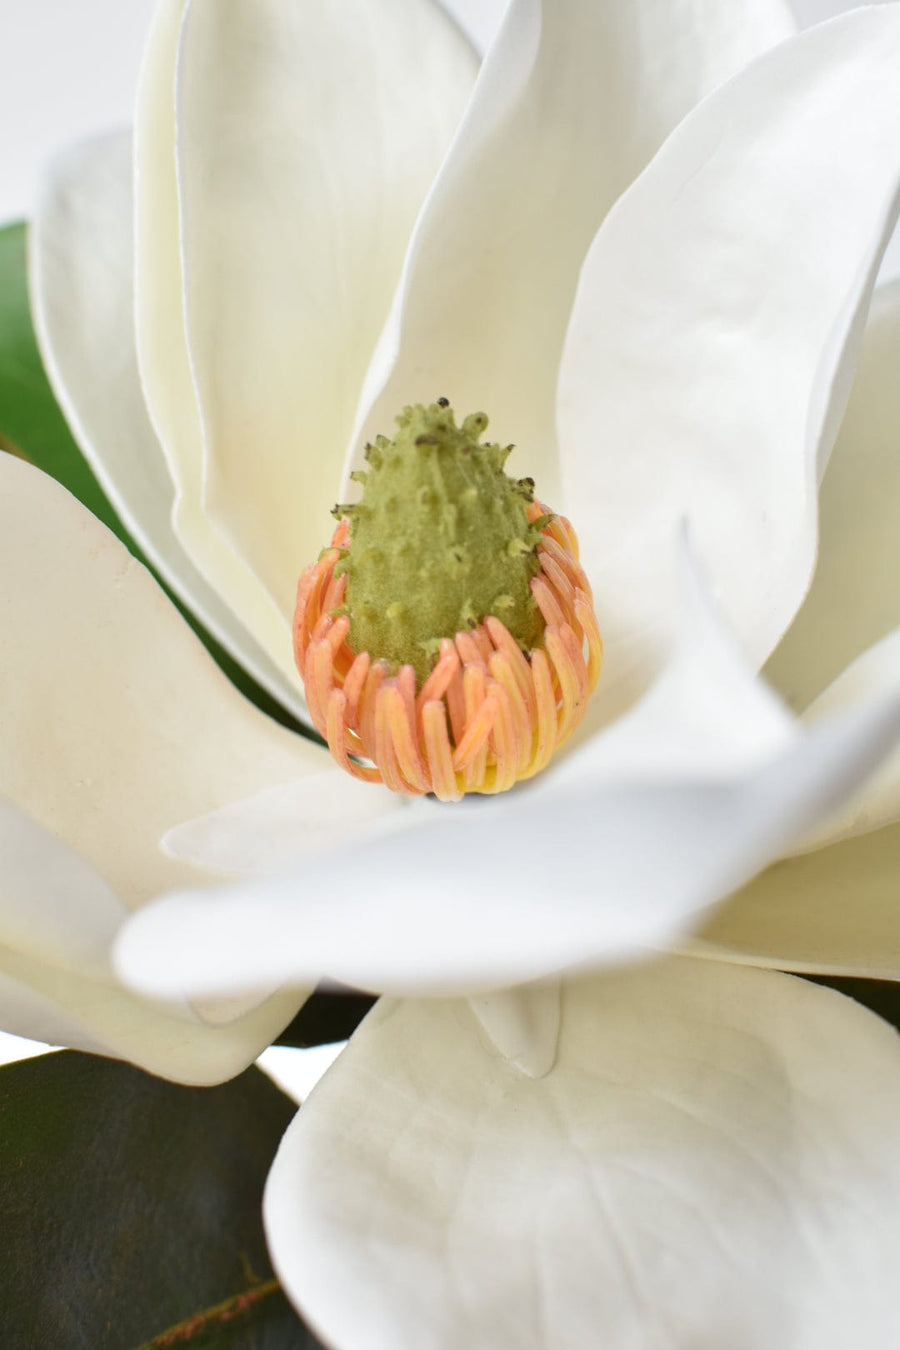 29" Faux Magnolia Blossom Stem: Large